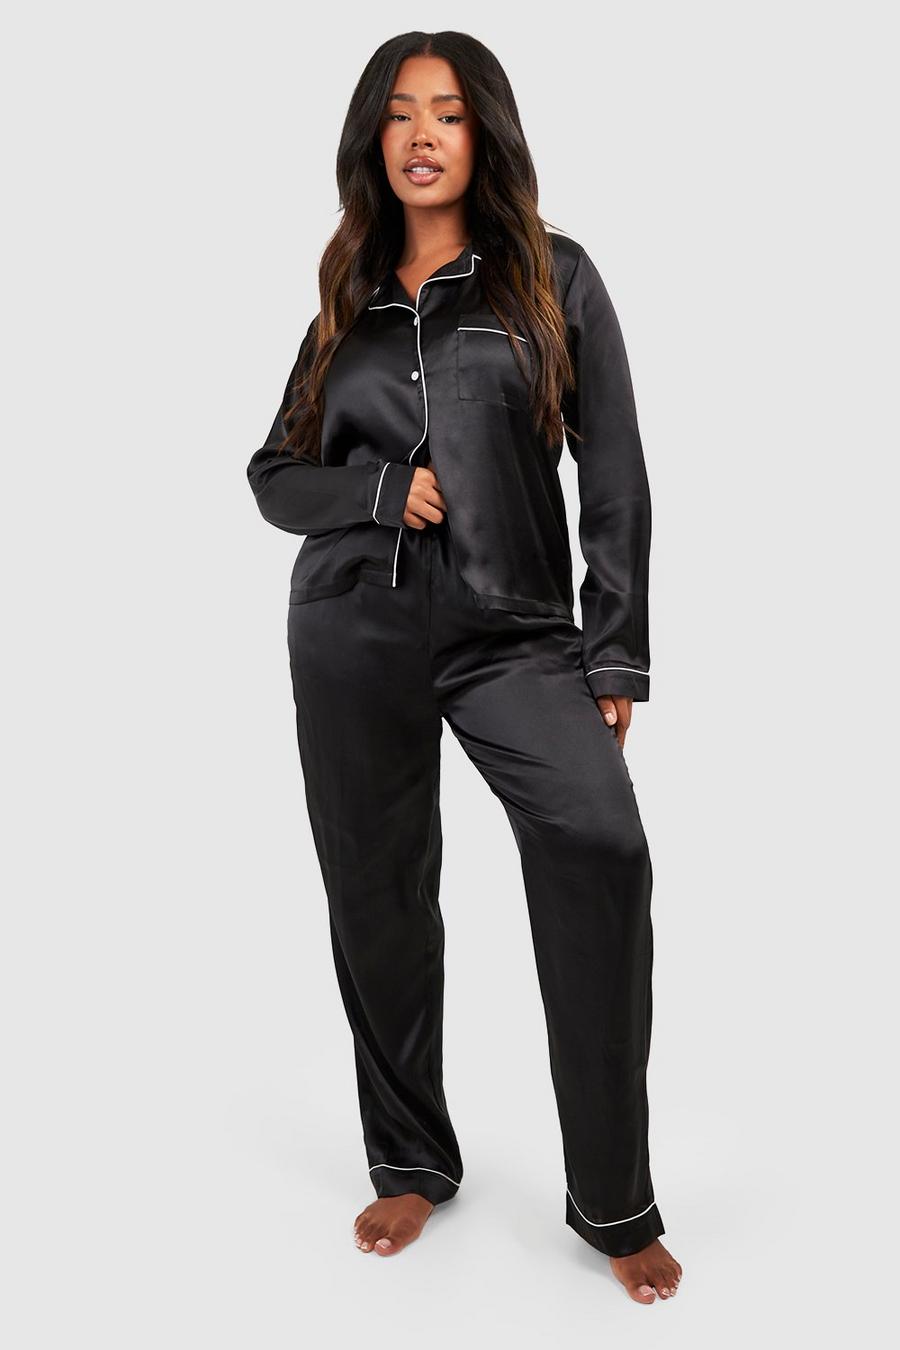 Pijama Plus de regalo con pantalón largo, antifaz y coletero, Black negro